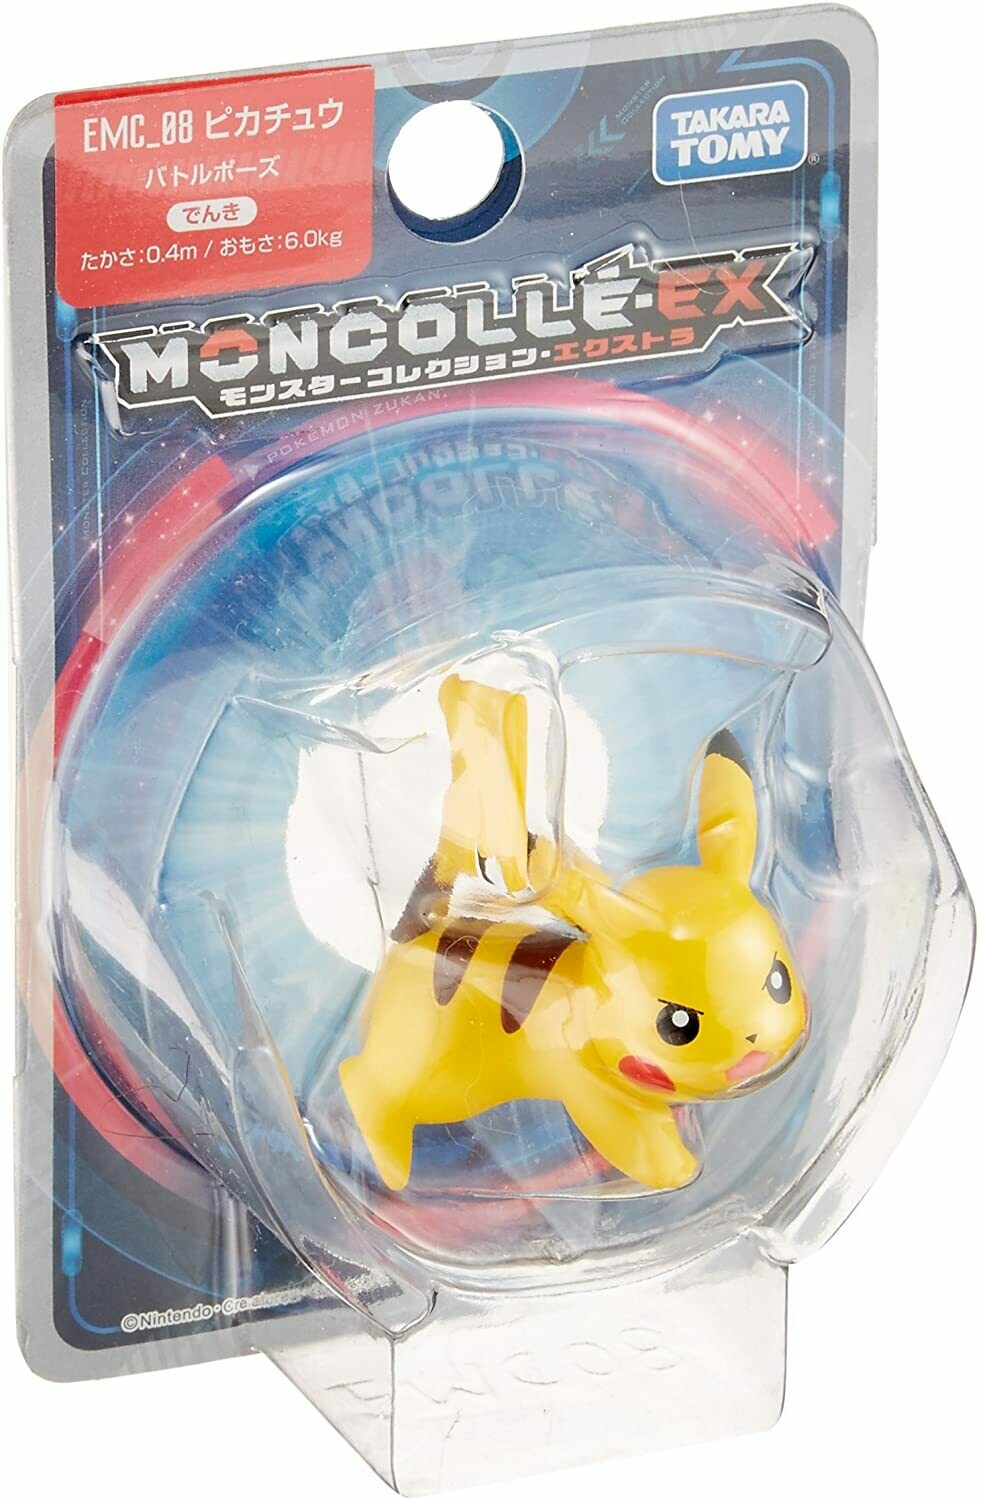 EX EMC-08 Mini Figure Pikachu Battle Pose